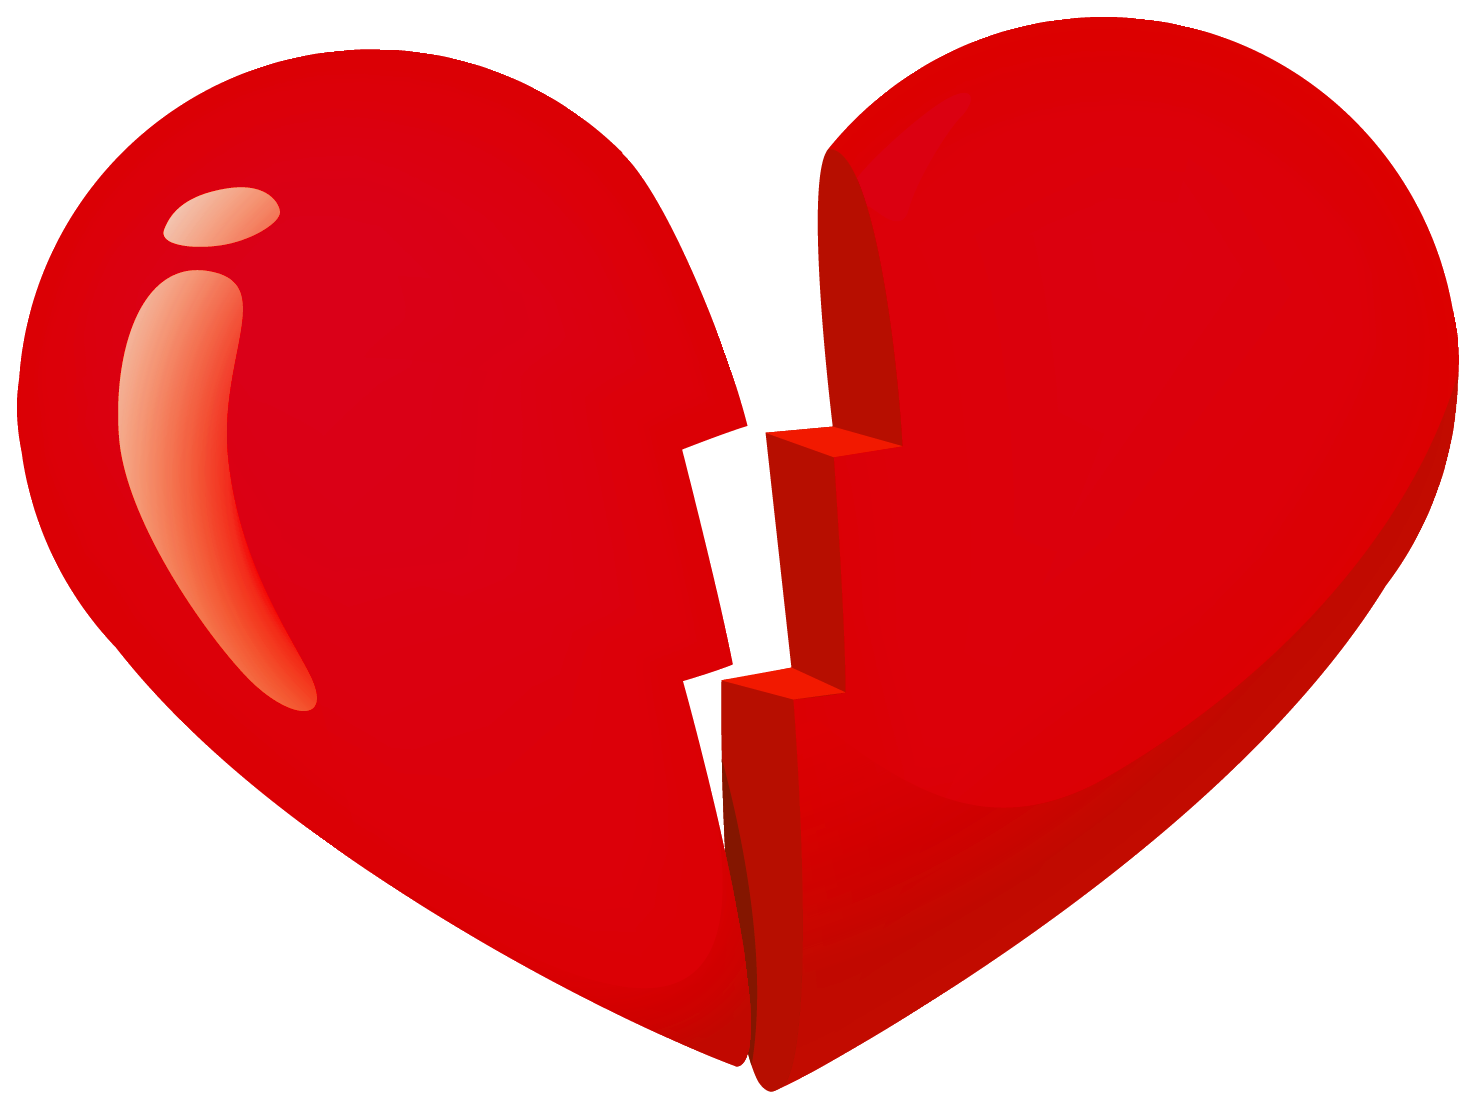 Valentine Red Broken Heart PNG Clipart